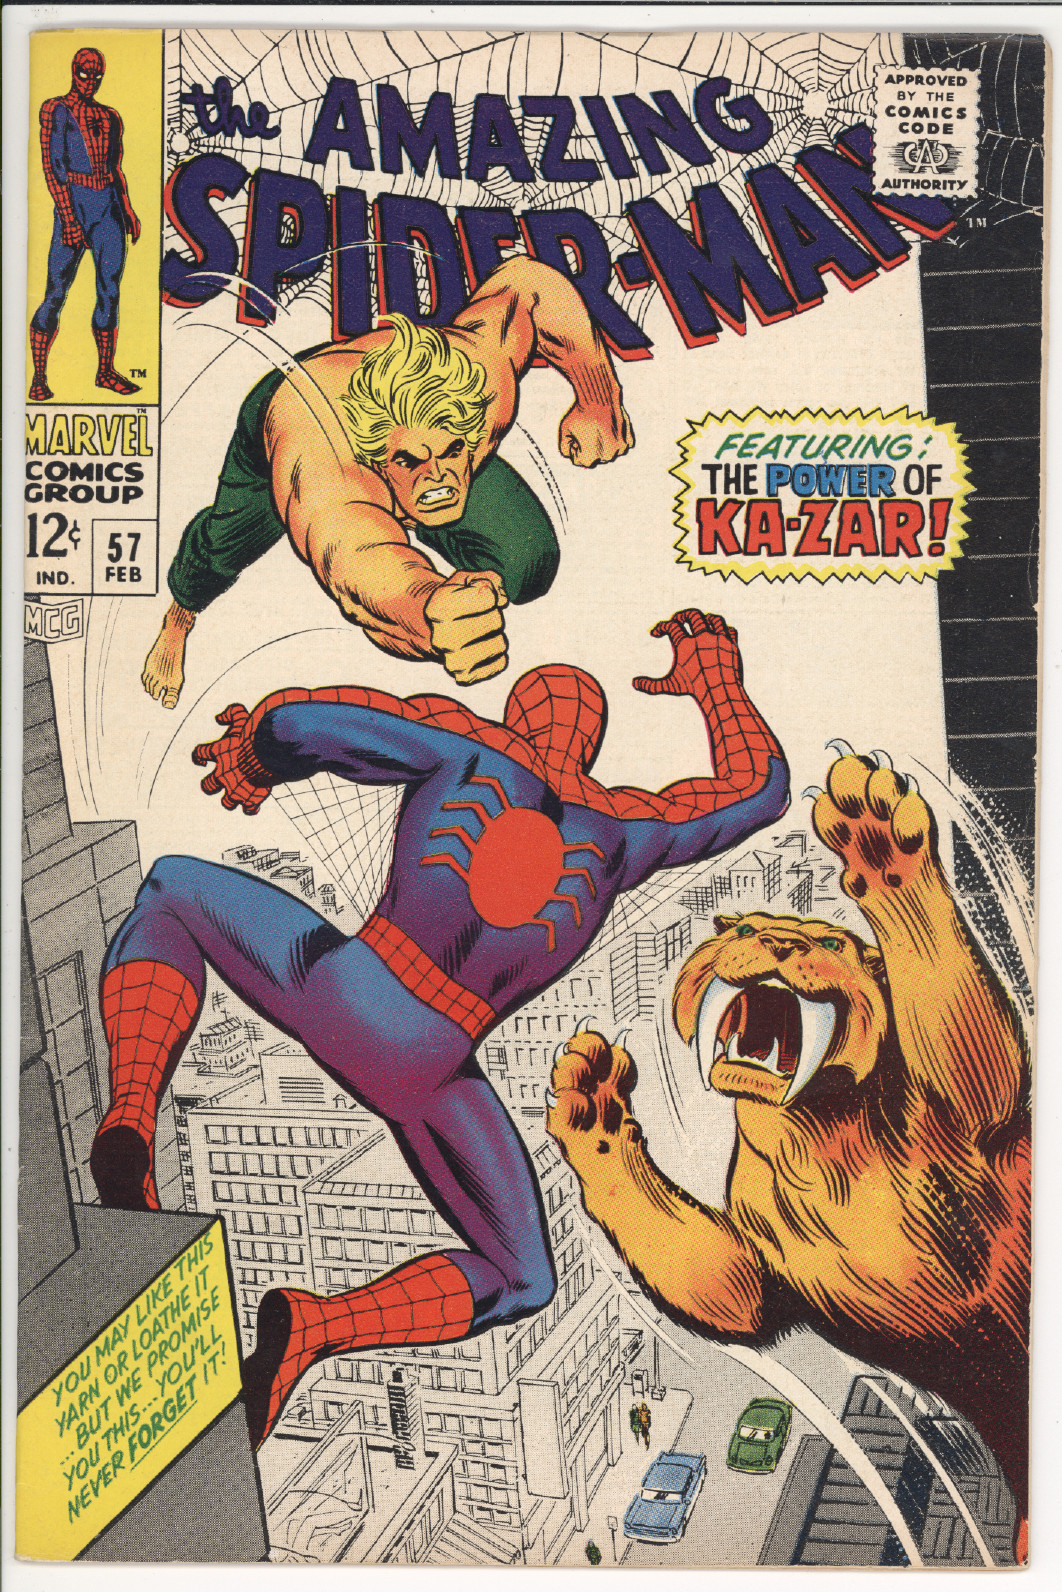 Amazing Spider-Man #57 front